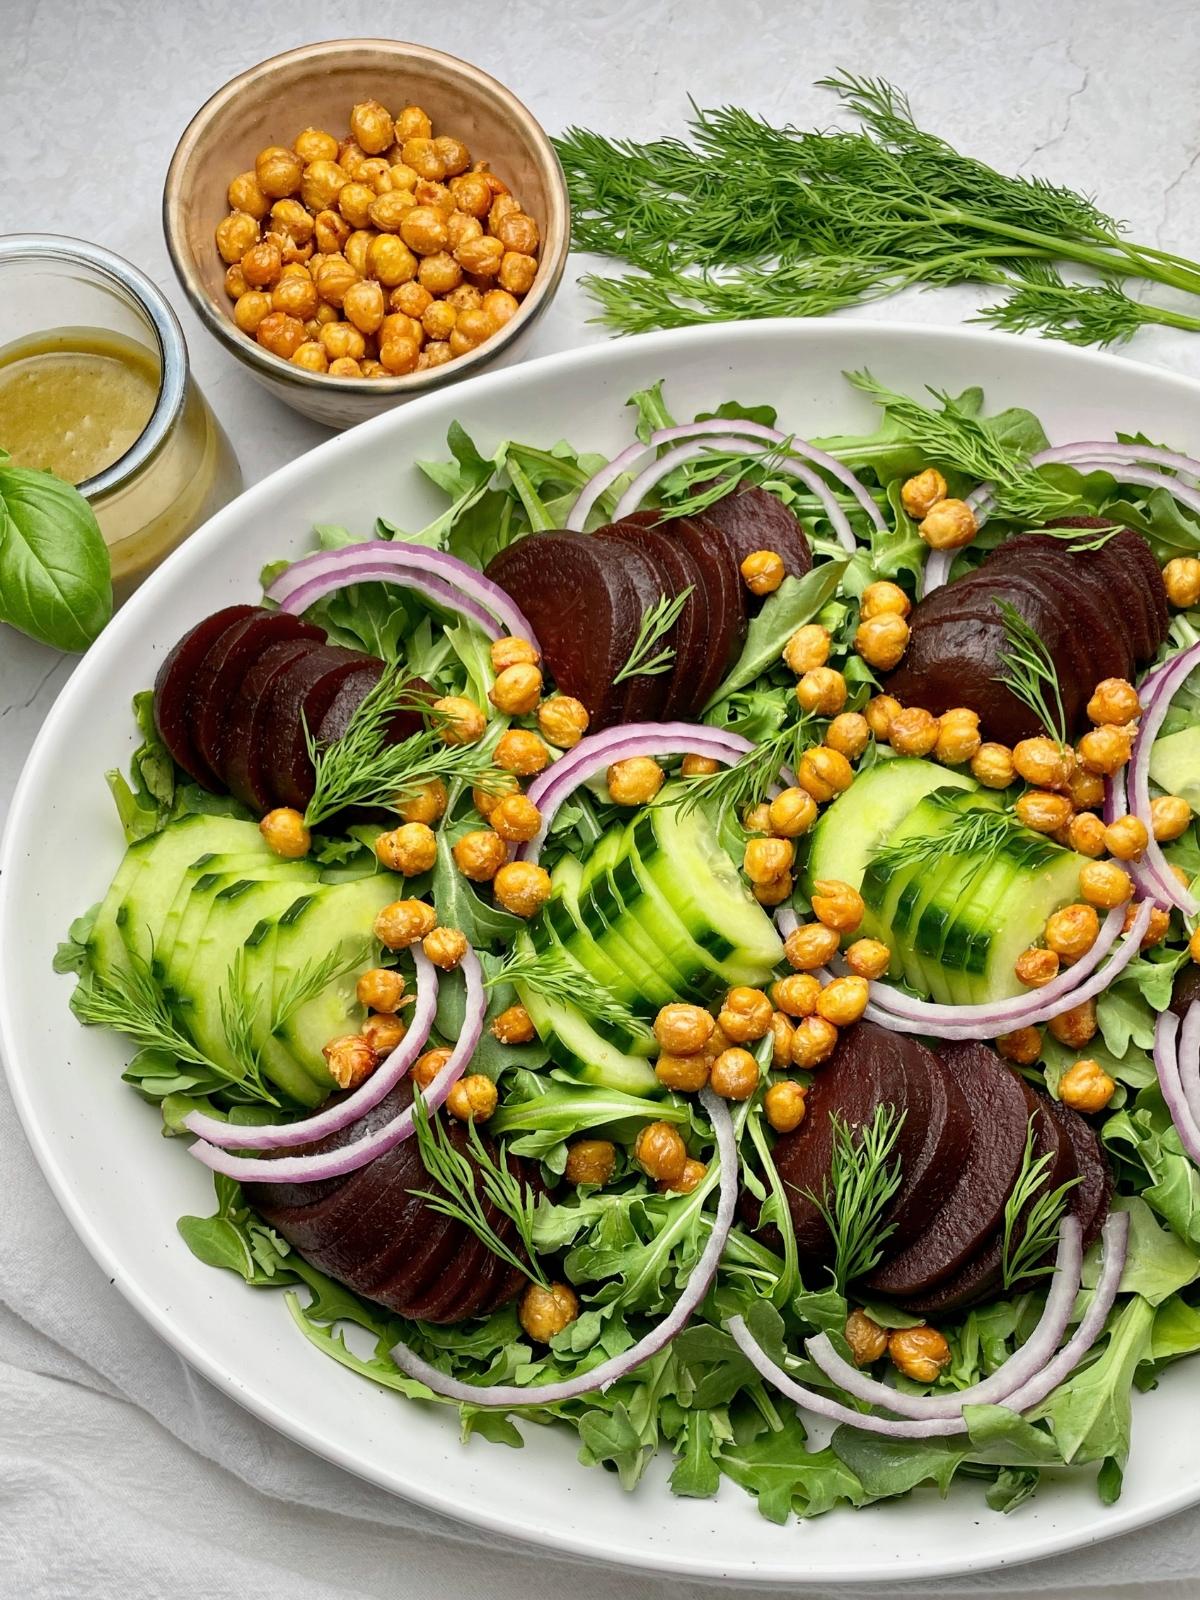 Roasted chickpeas on top of a beet salad.